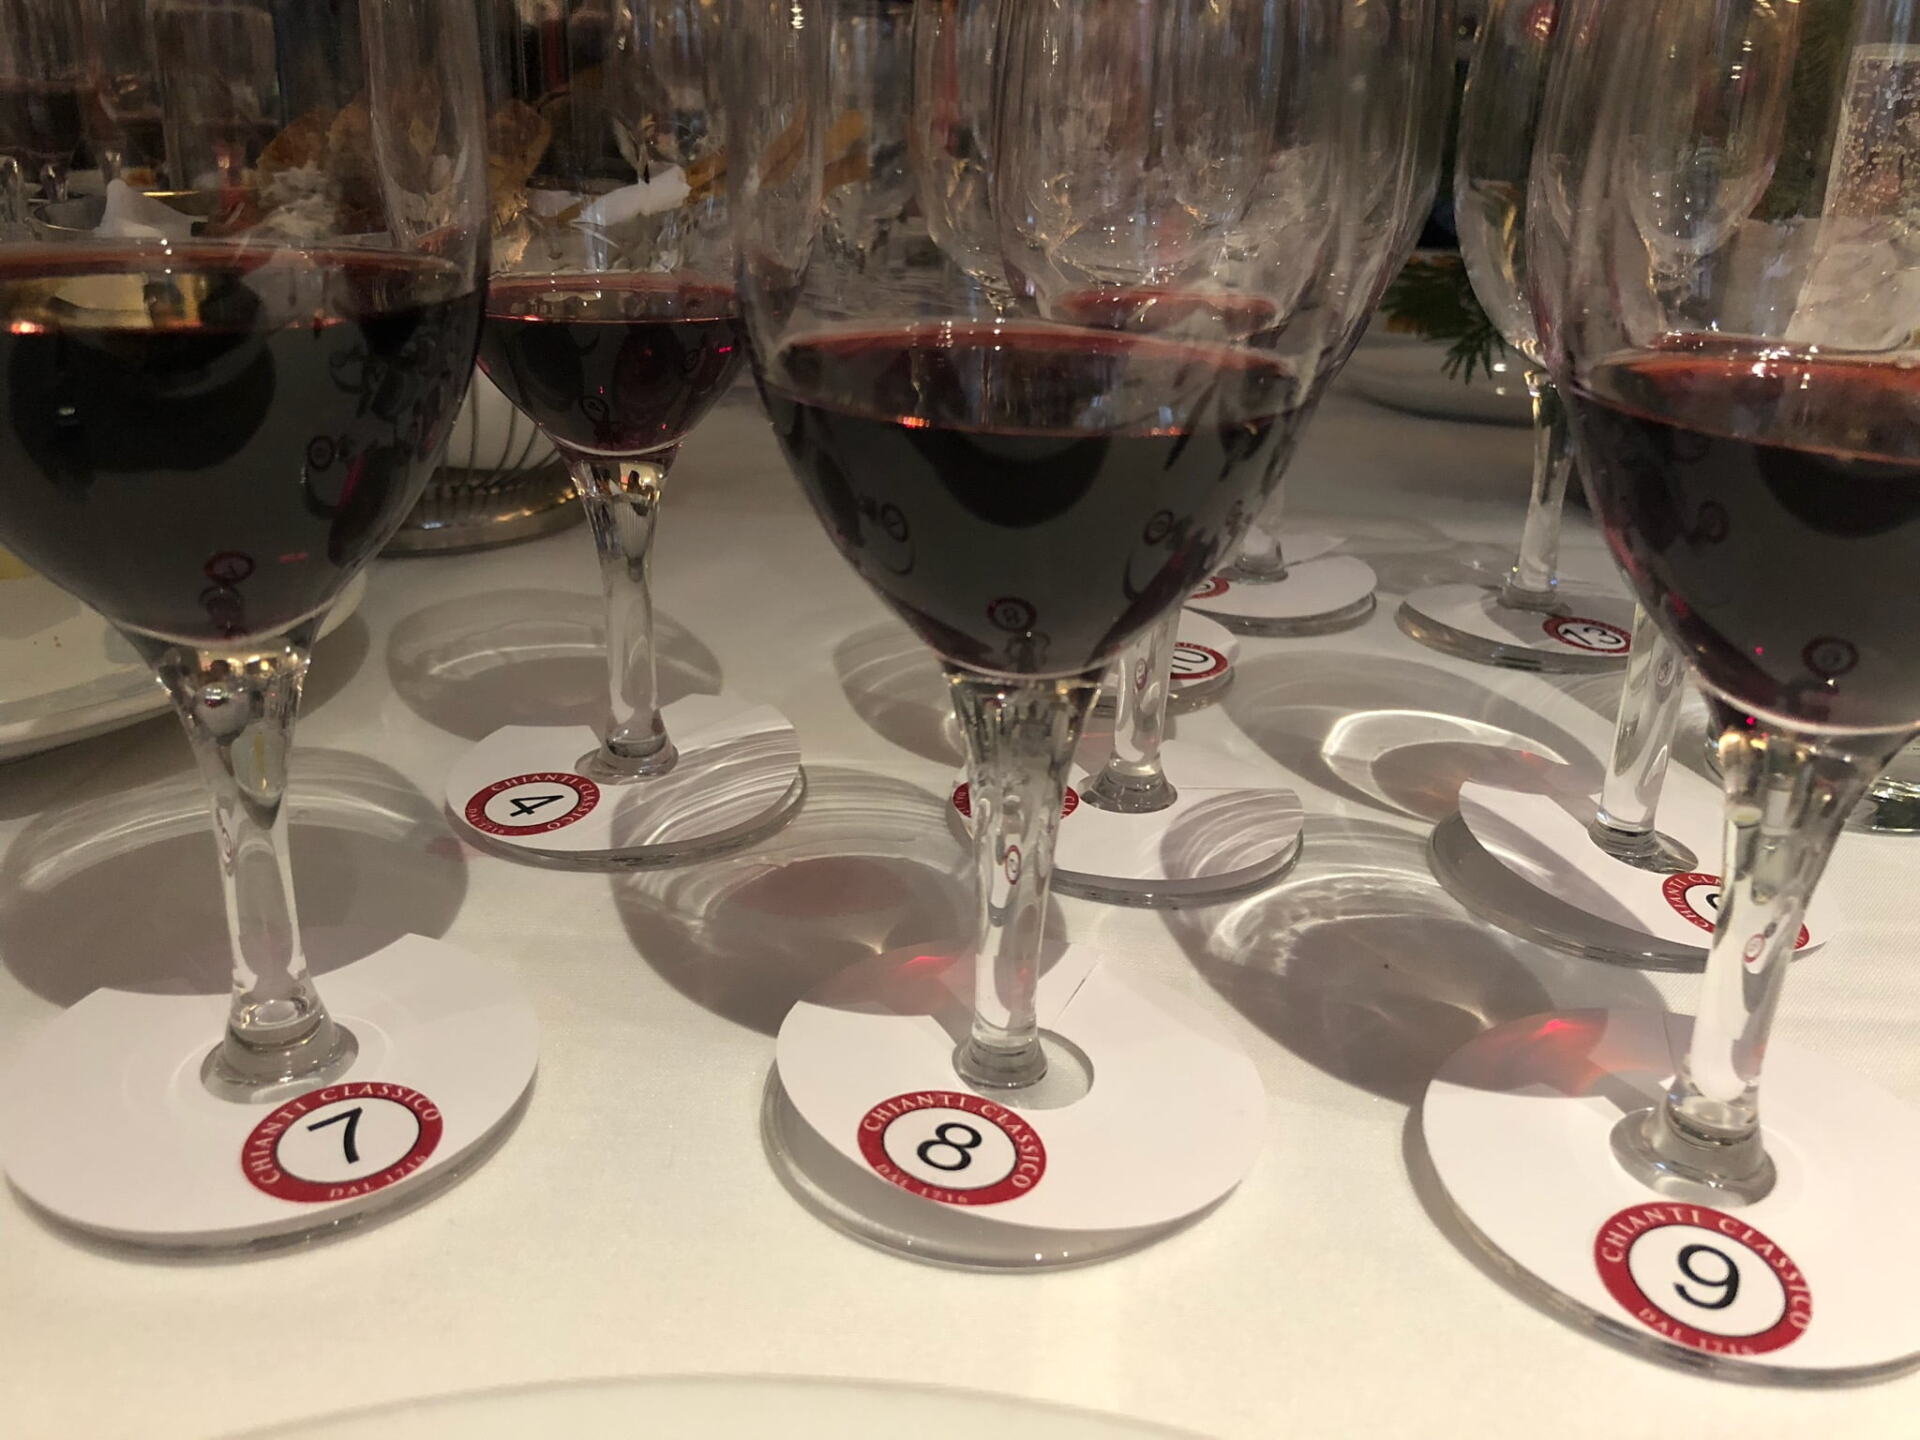 Wine in wine glasses